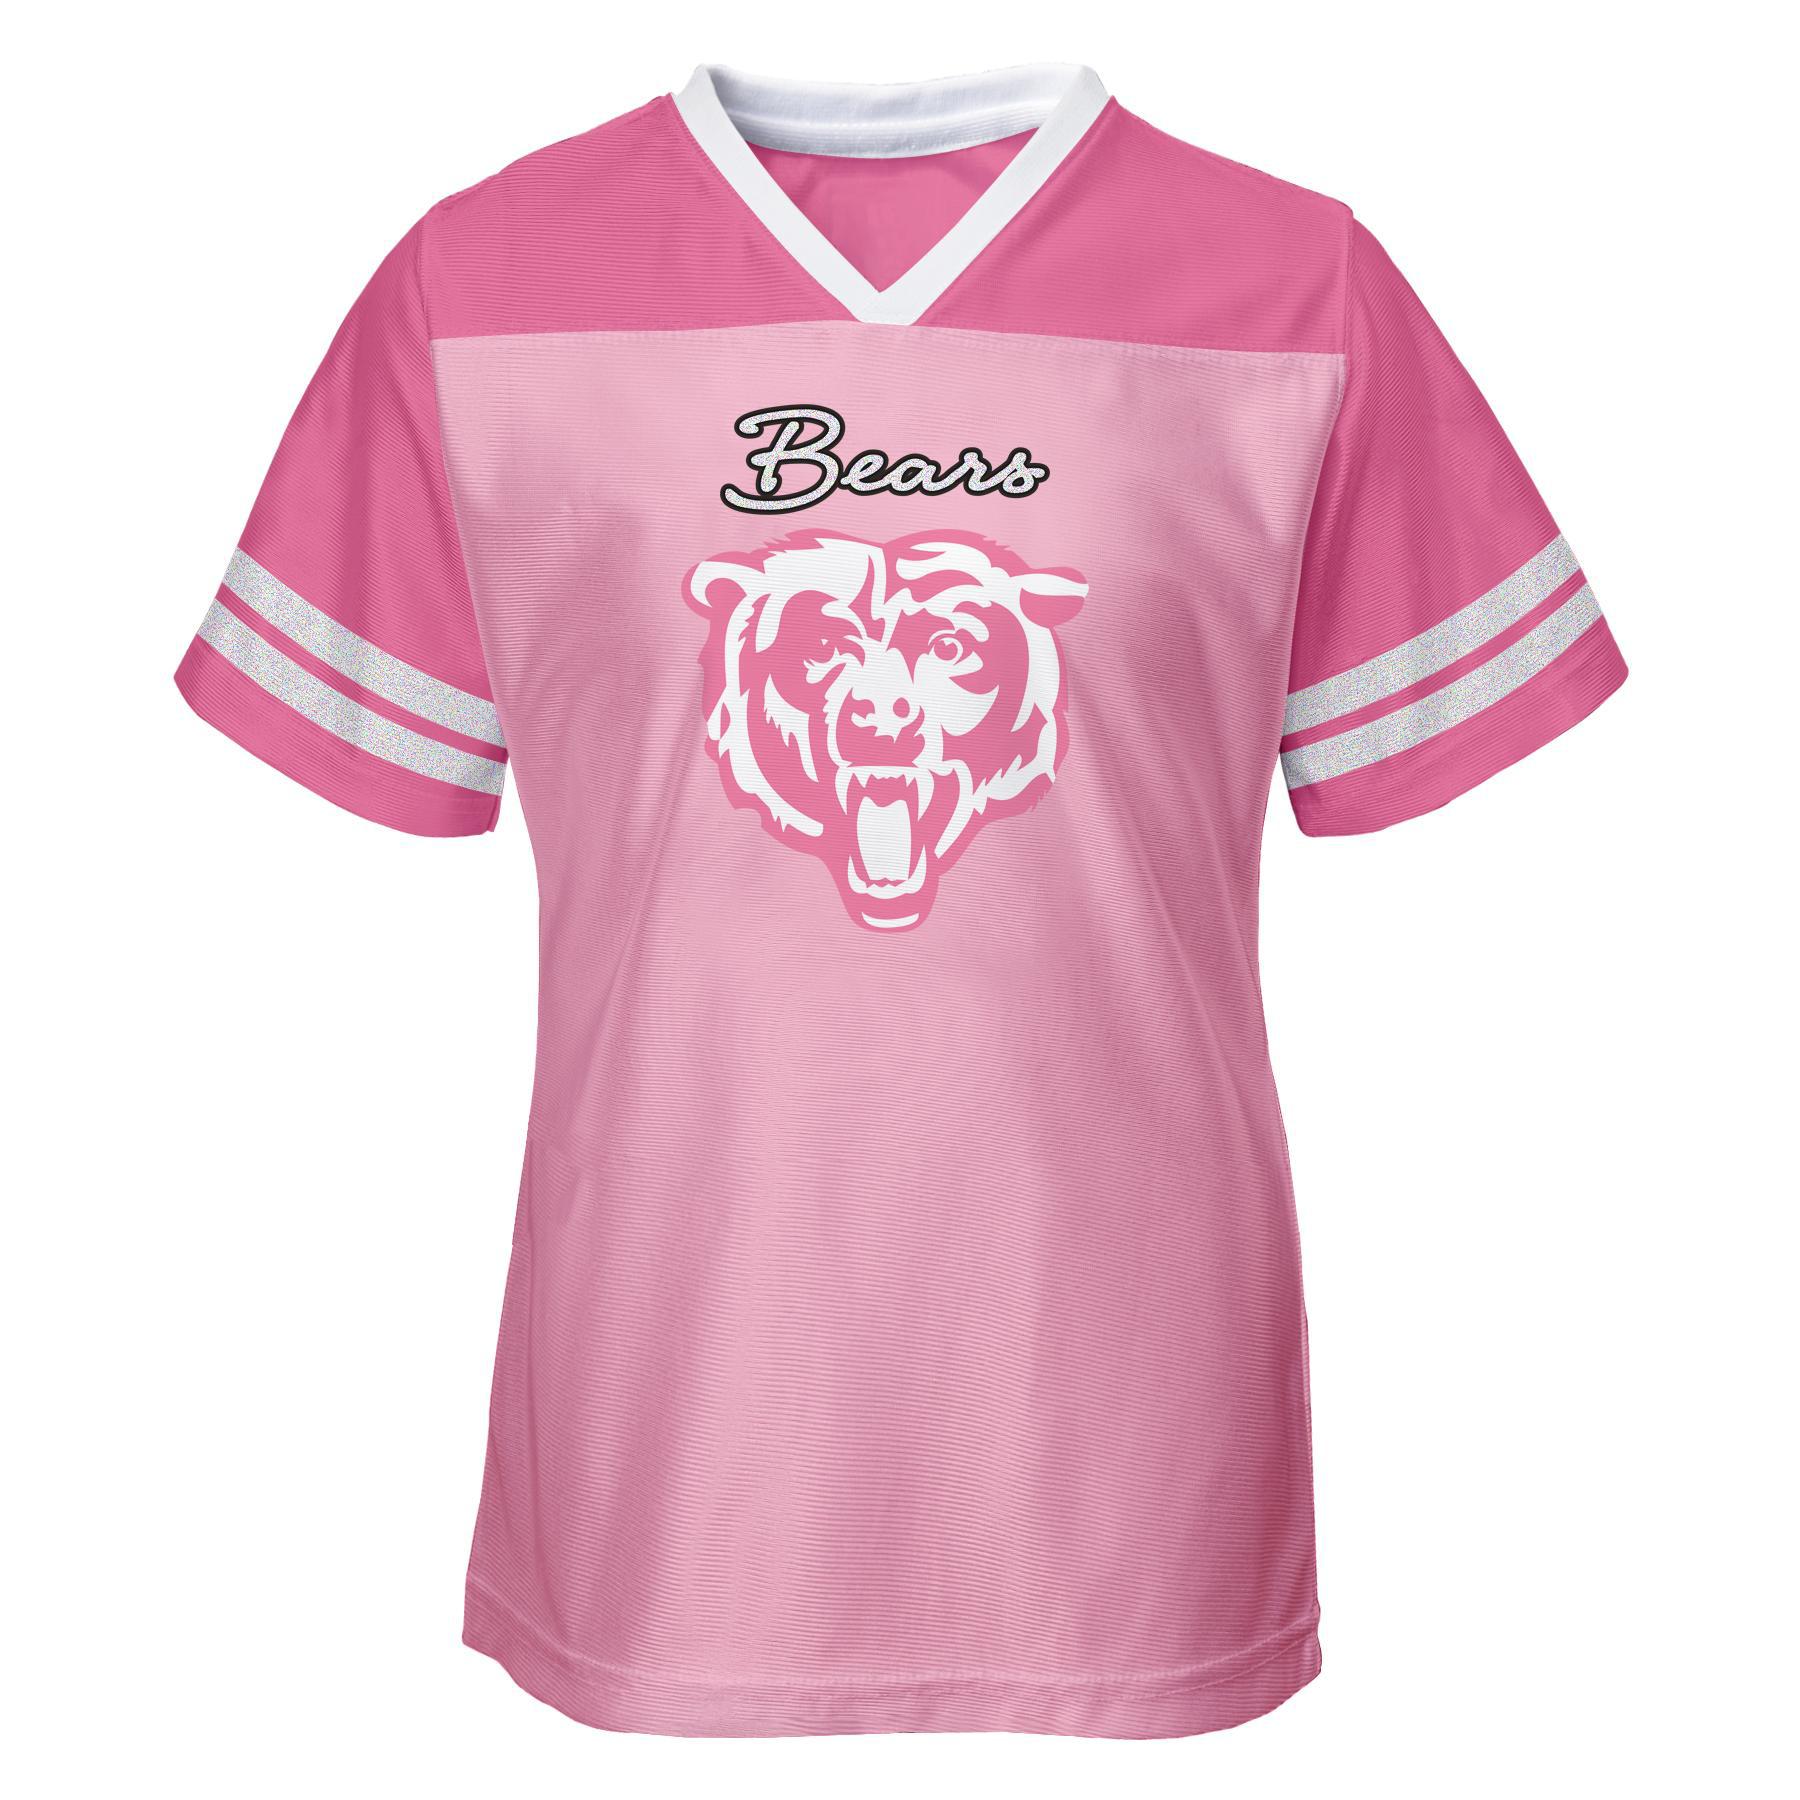 NFL Toddler Girls' Team Jersey - Chicago Bears